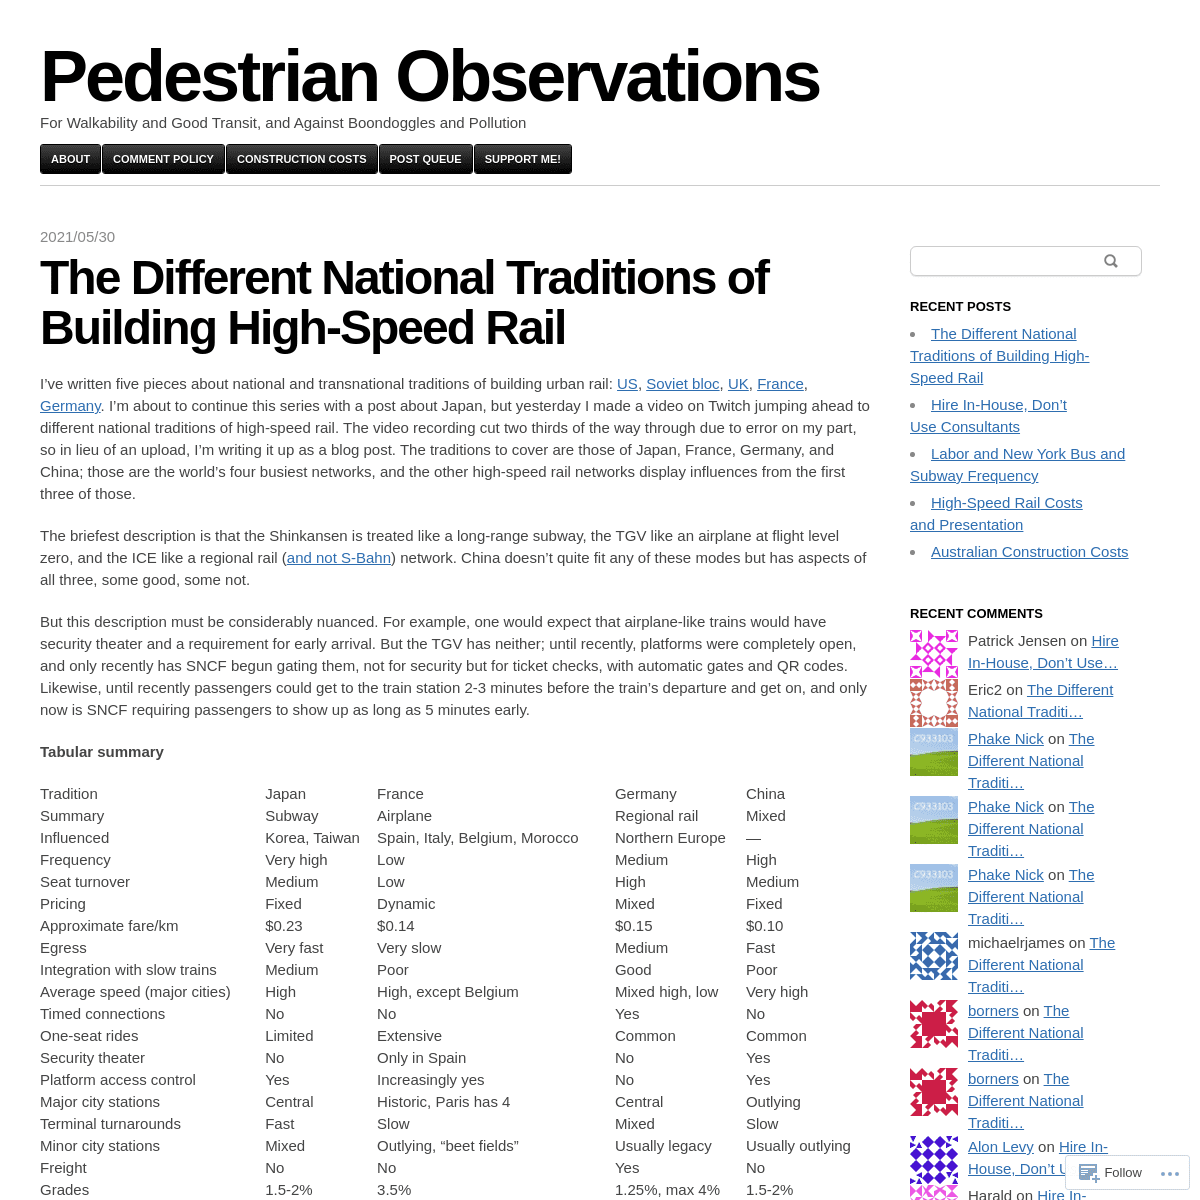 A complete backup of https://pedestrianobservations.com